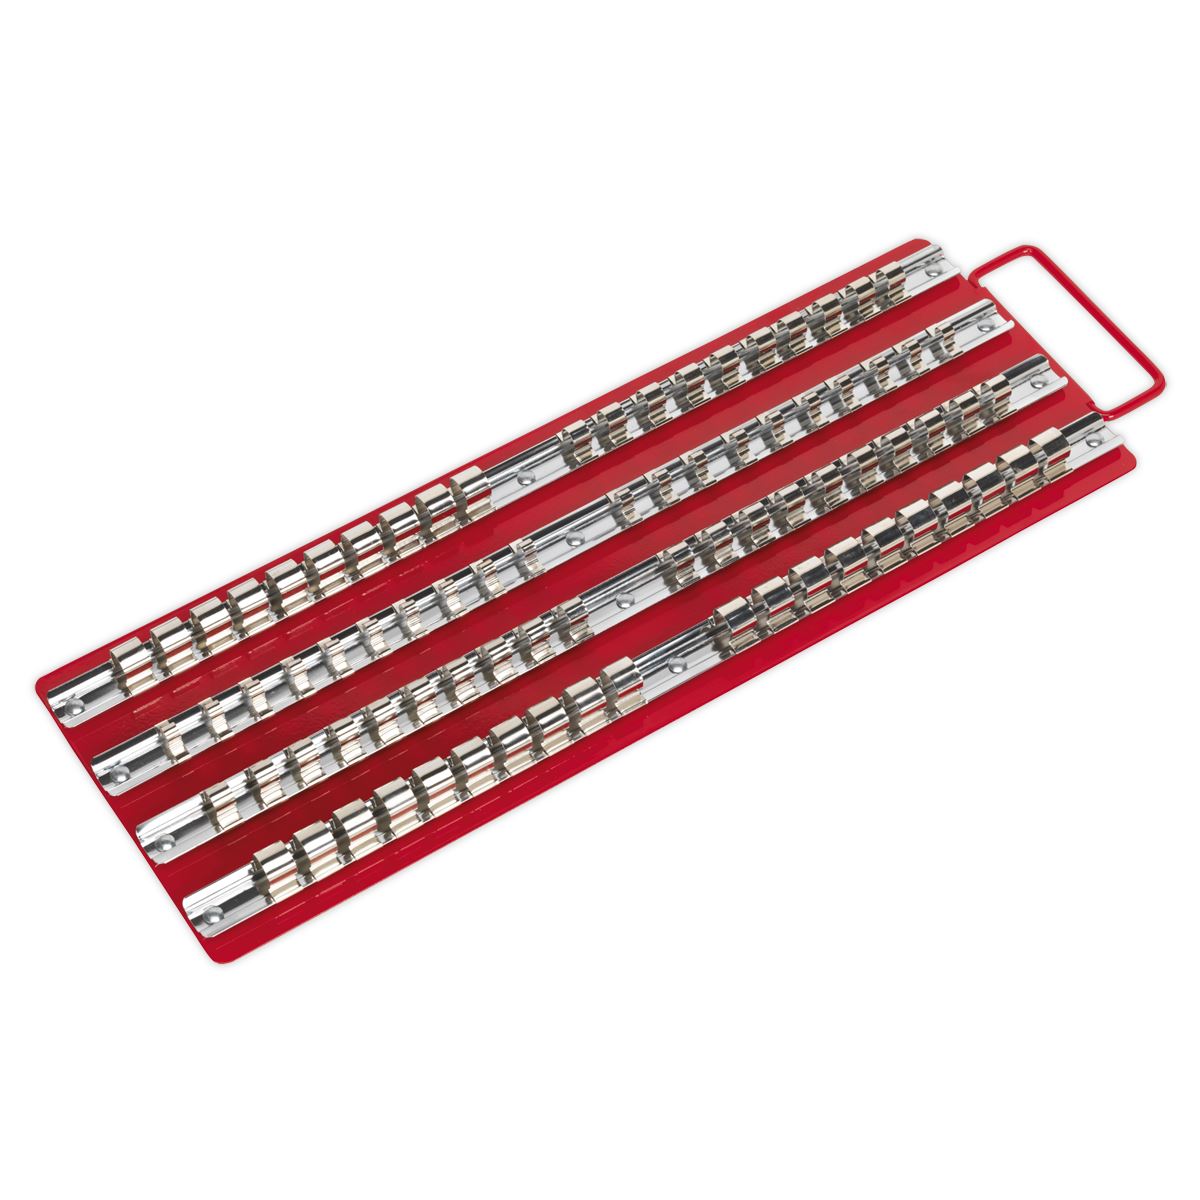 Sealey Premier Socket Rail Tray Red 1/4", 3/8" & 1/2"Sq Drive